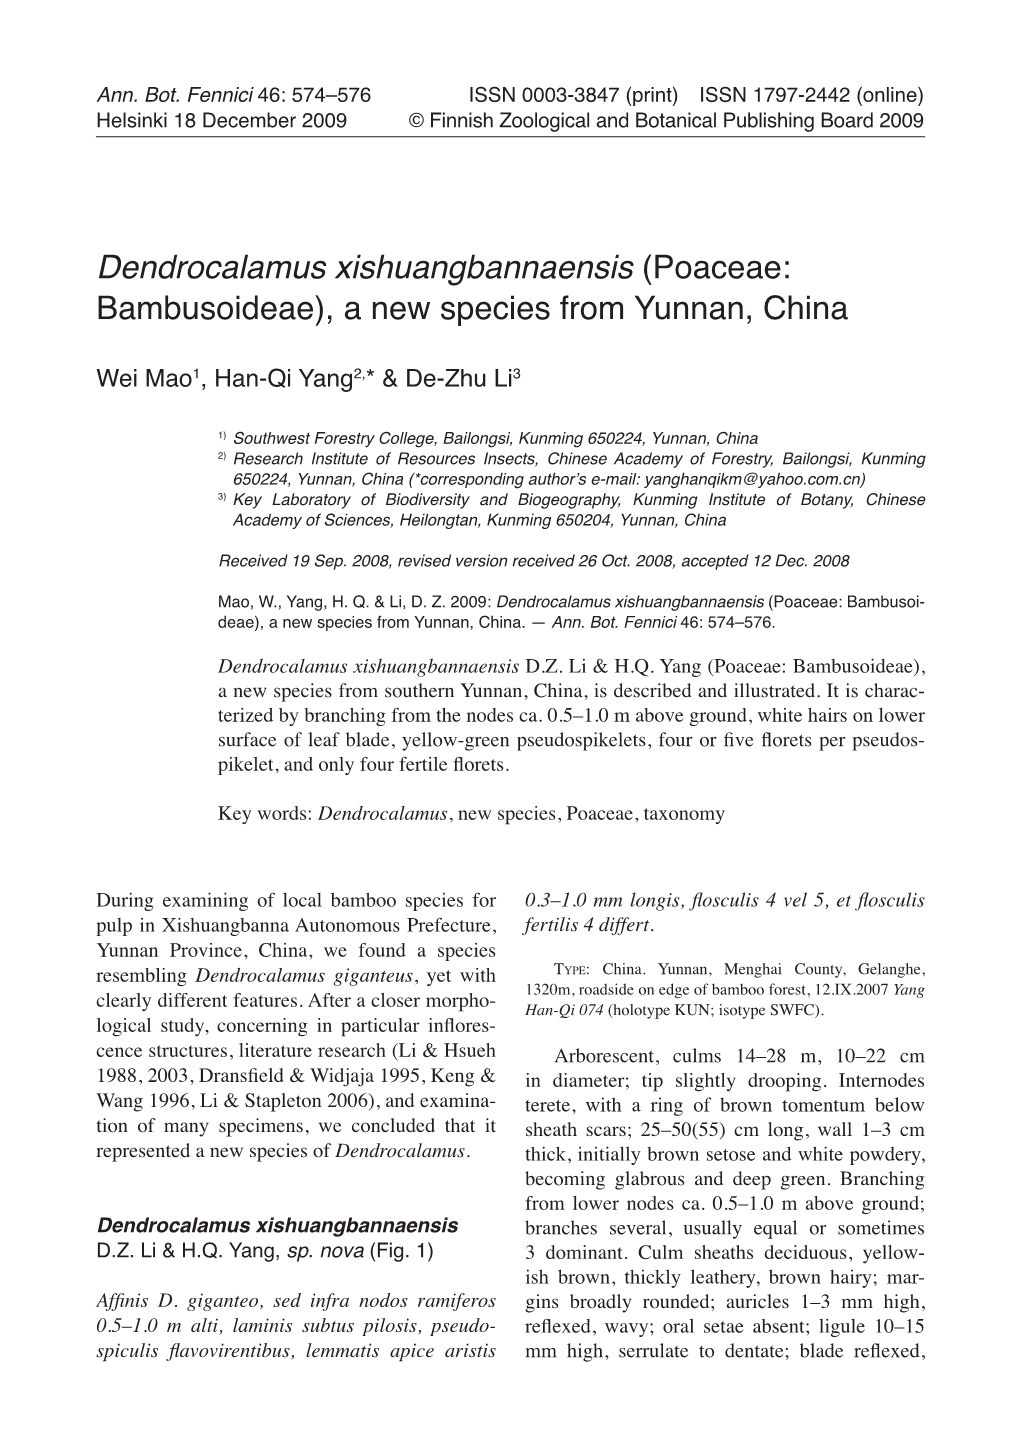 Dendrocalamus Xishuangbannaensis (Poaceae: Bambusoideae), a New Species from Yunnan, China